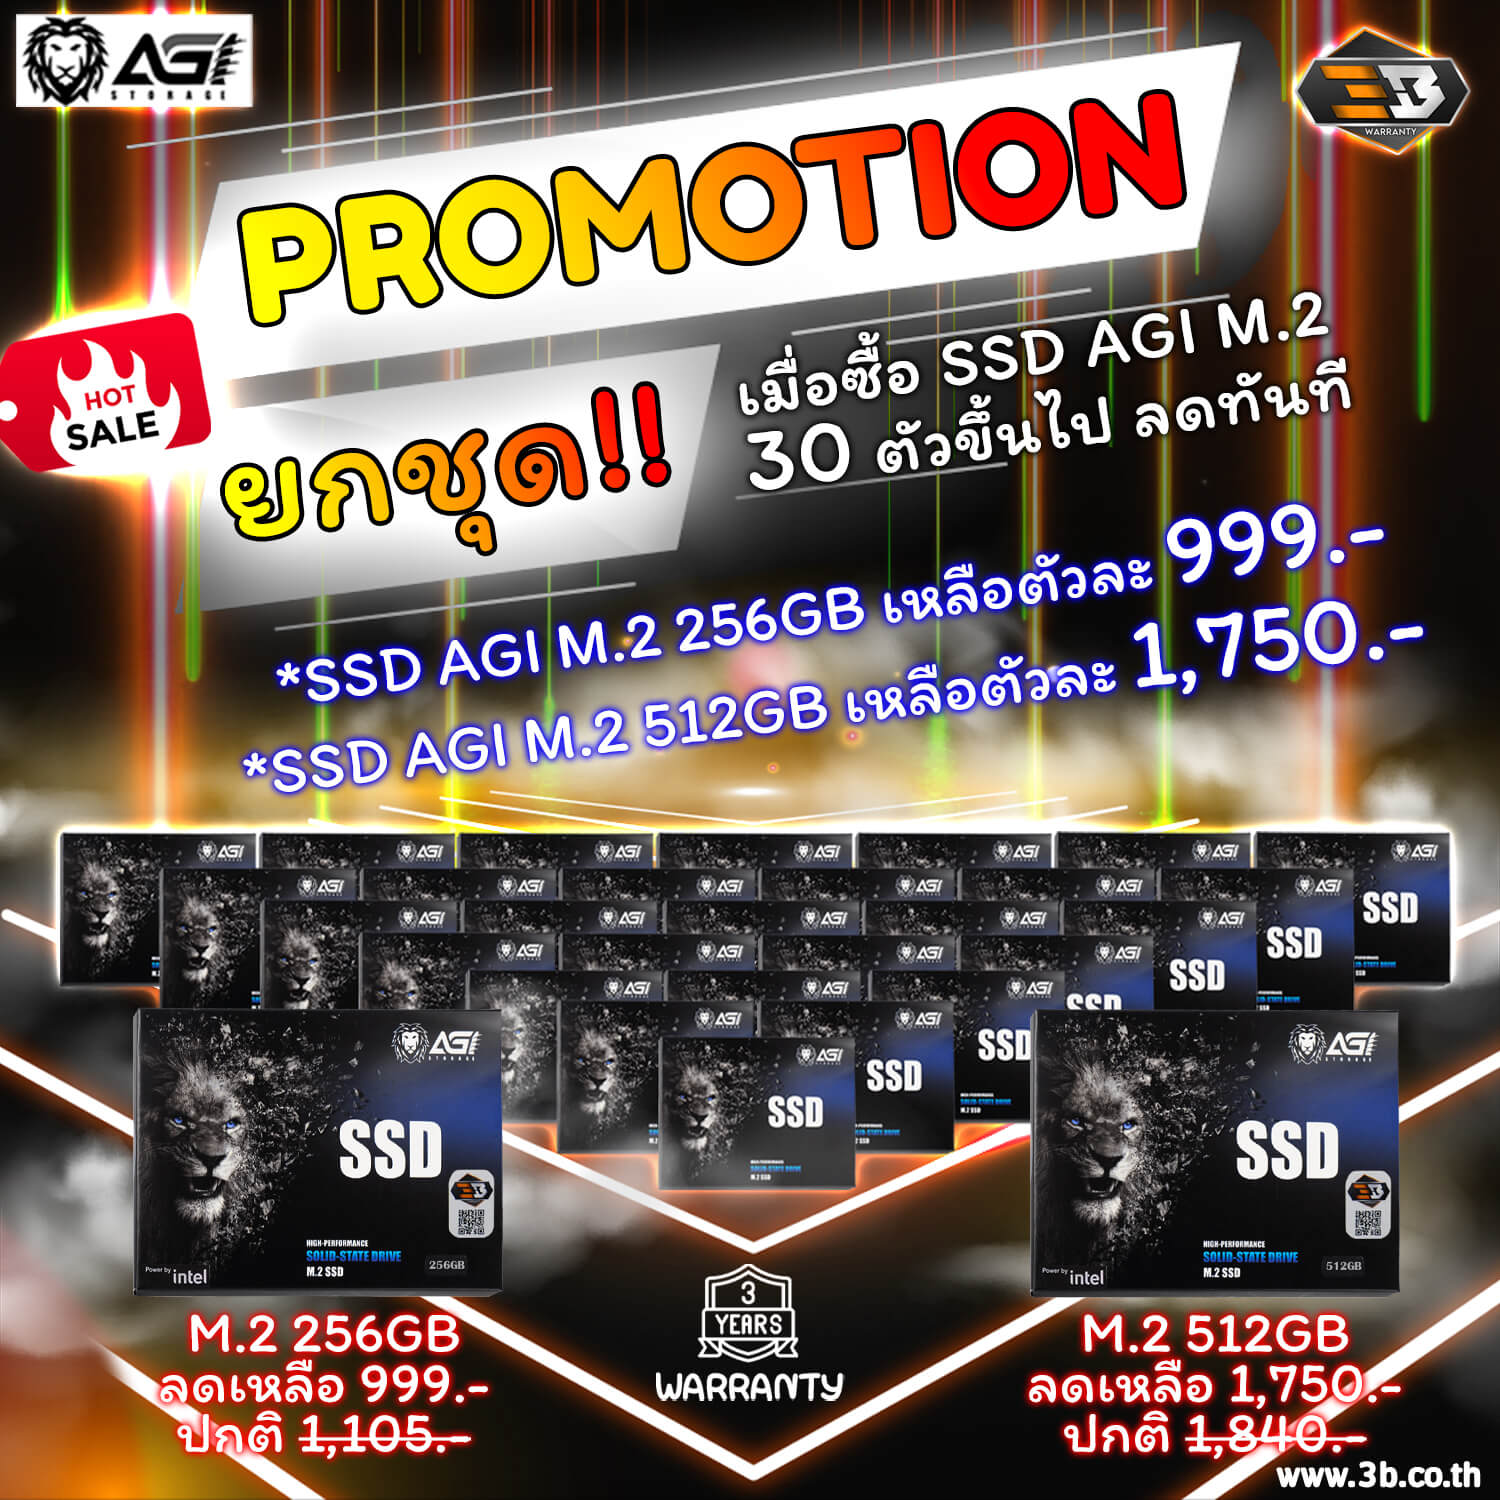 Promotion AGI M2 30 (2)